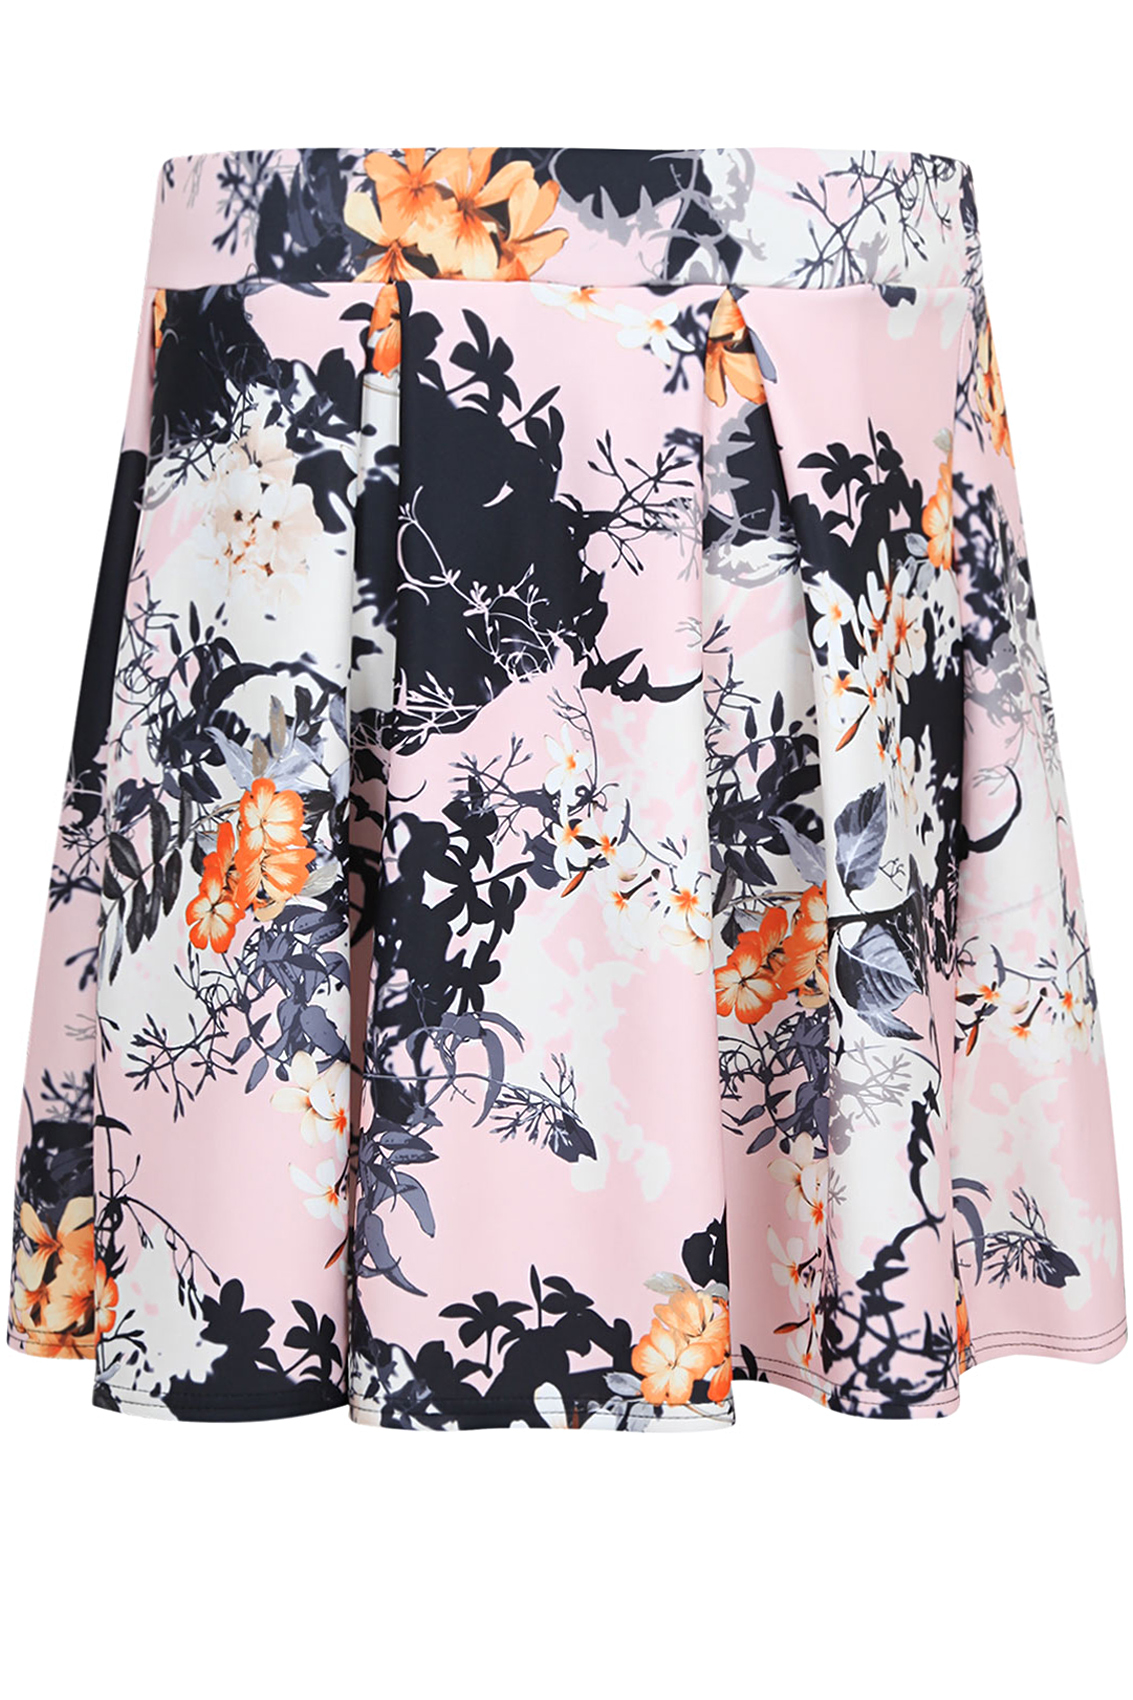 Nude Pink & Black Oriental Floral Print Skater Skirt Plus Size 14 to 28